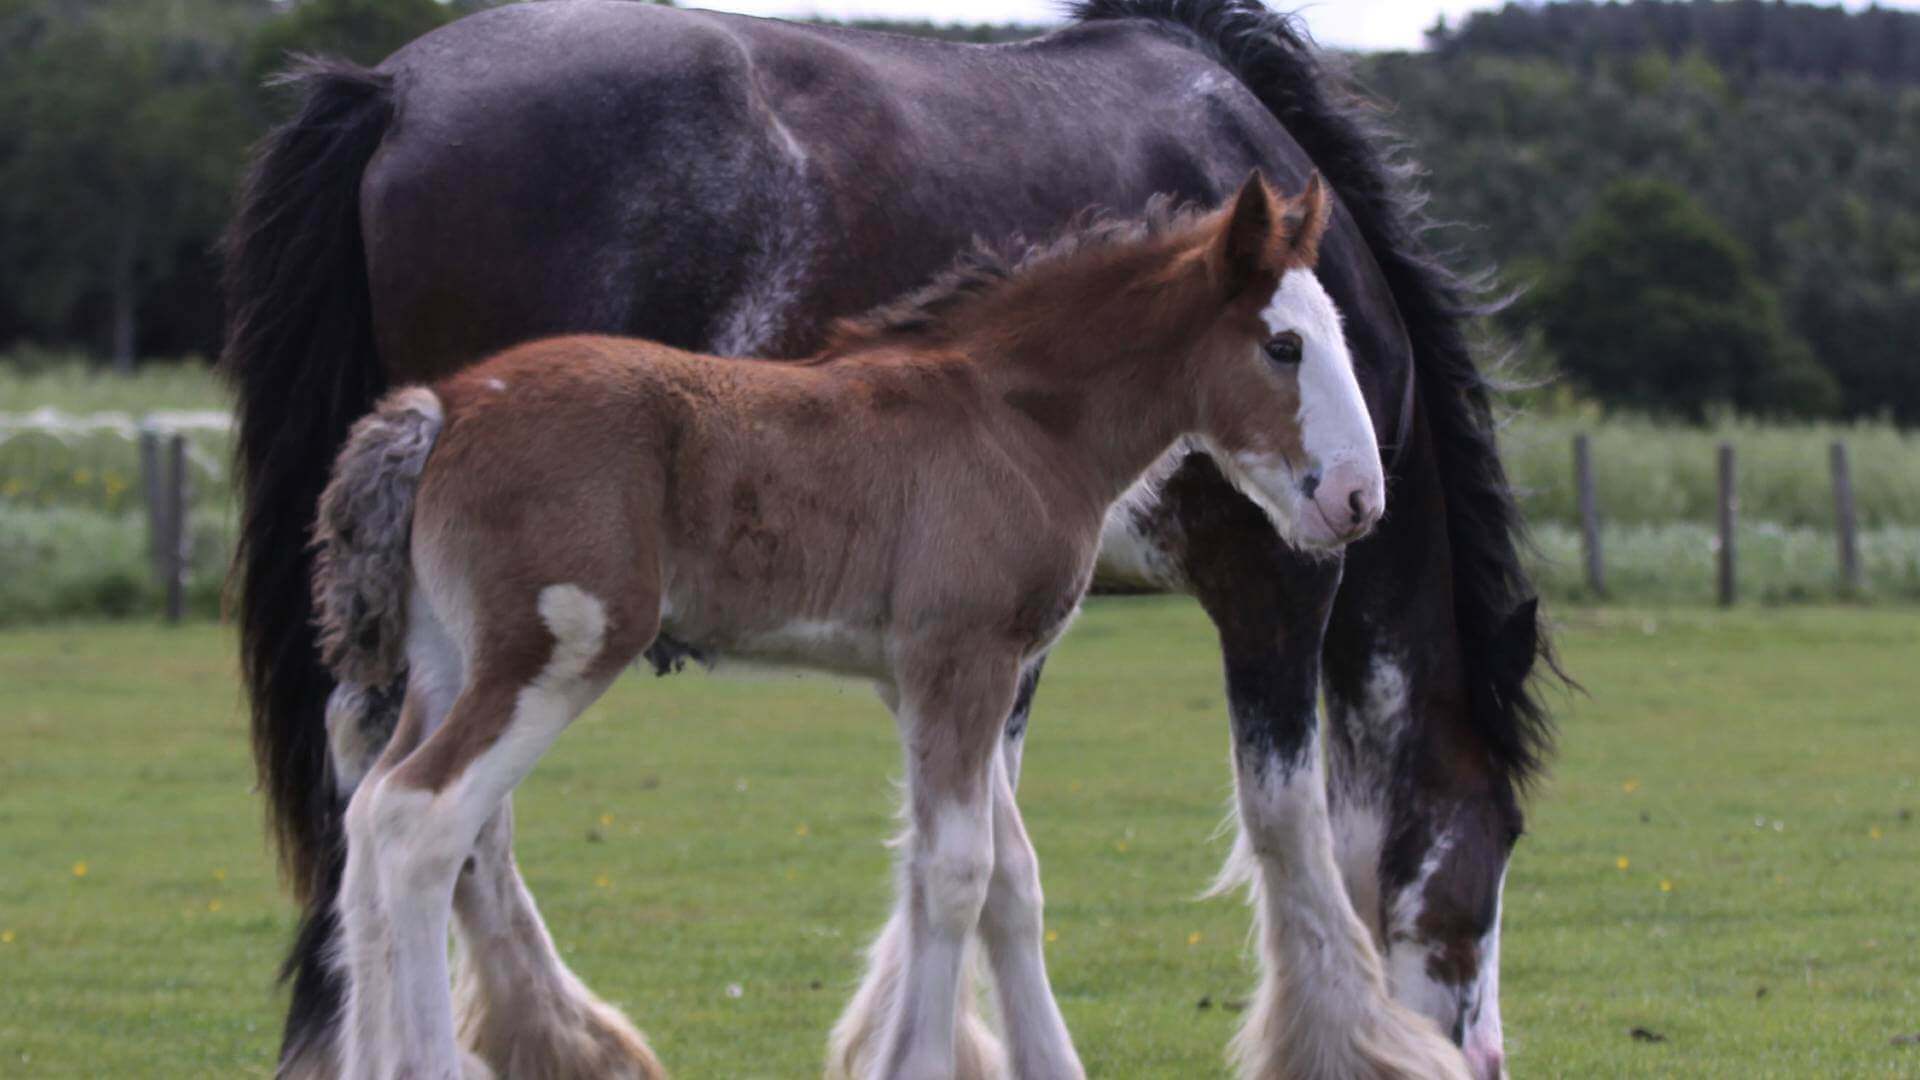 Mum and foal